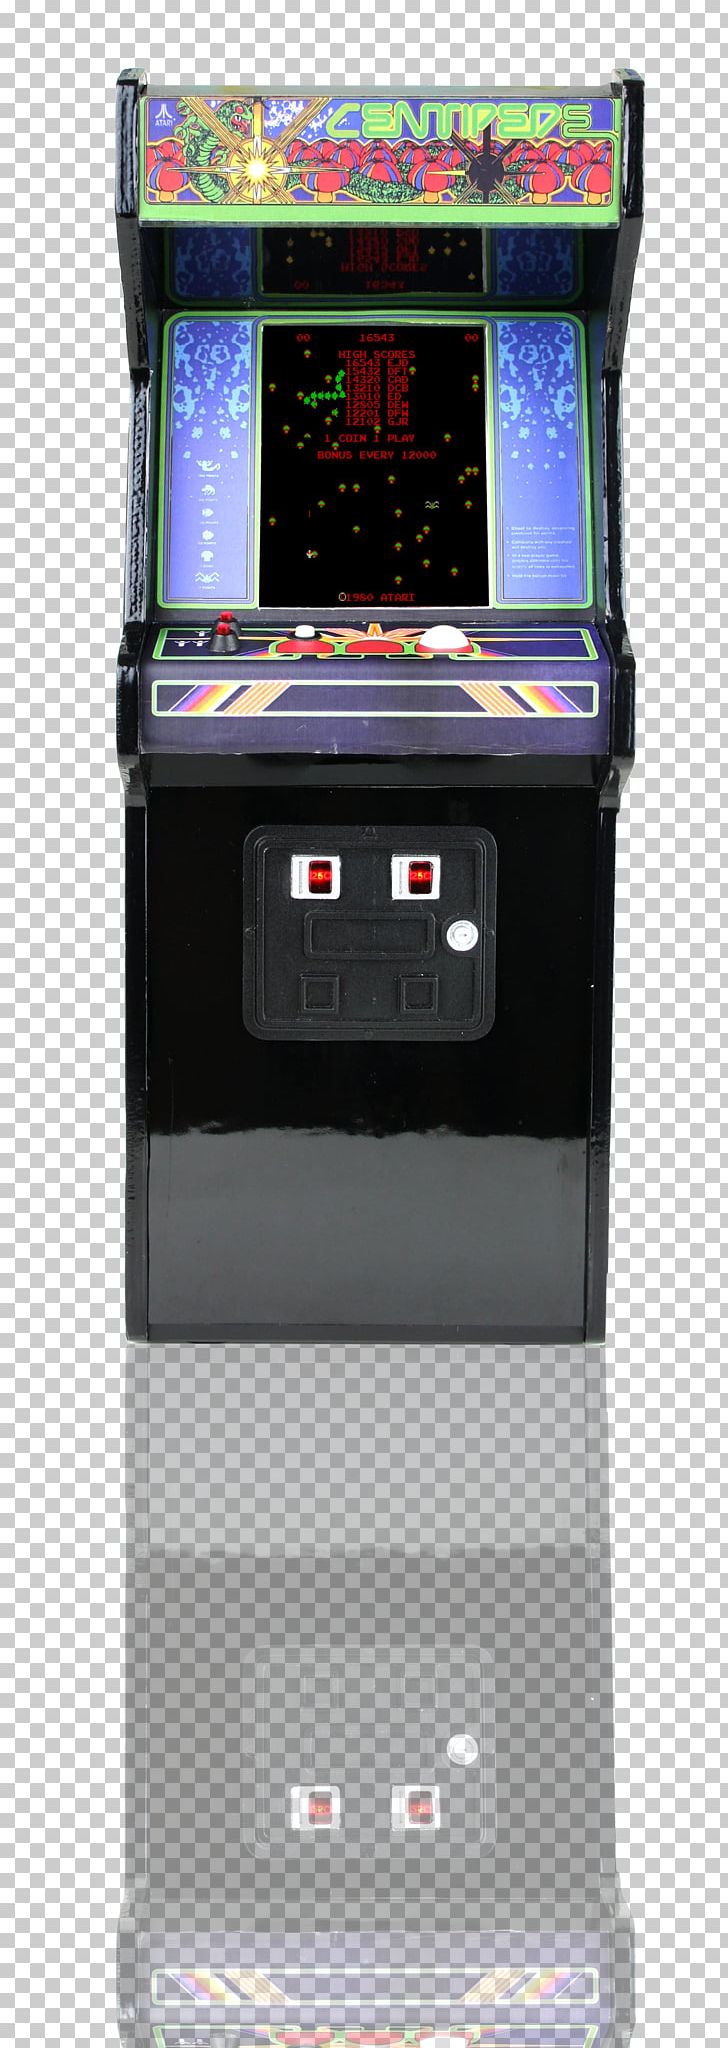 Centipede Arcade Game Video Game Arcade Cabinet Retrogaming PNG, Clipart, Arcade, Arcade Cabinet, Arcade Game, Arcade Machine, Atari Free PNG Download